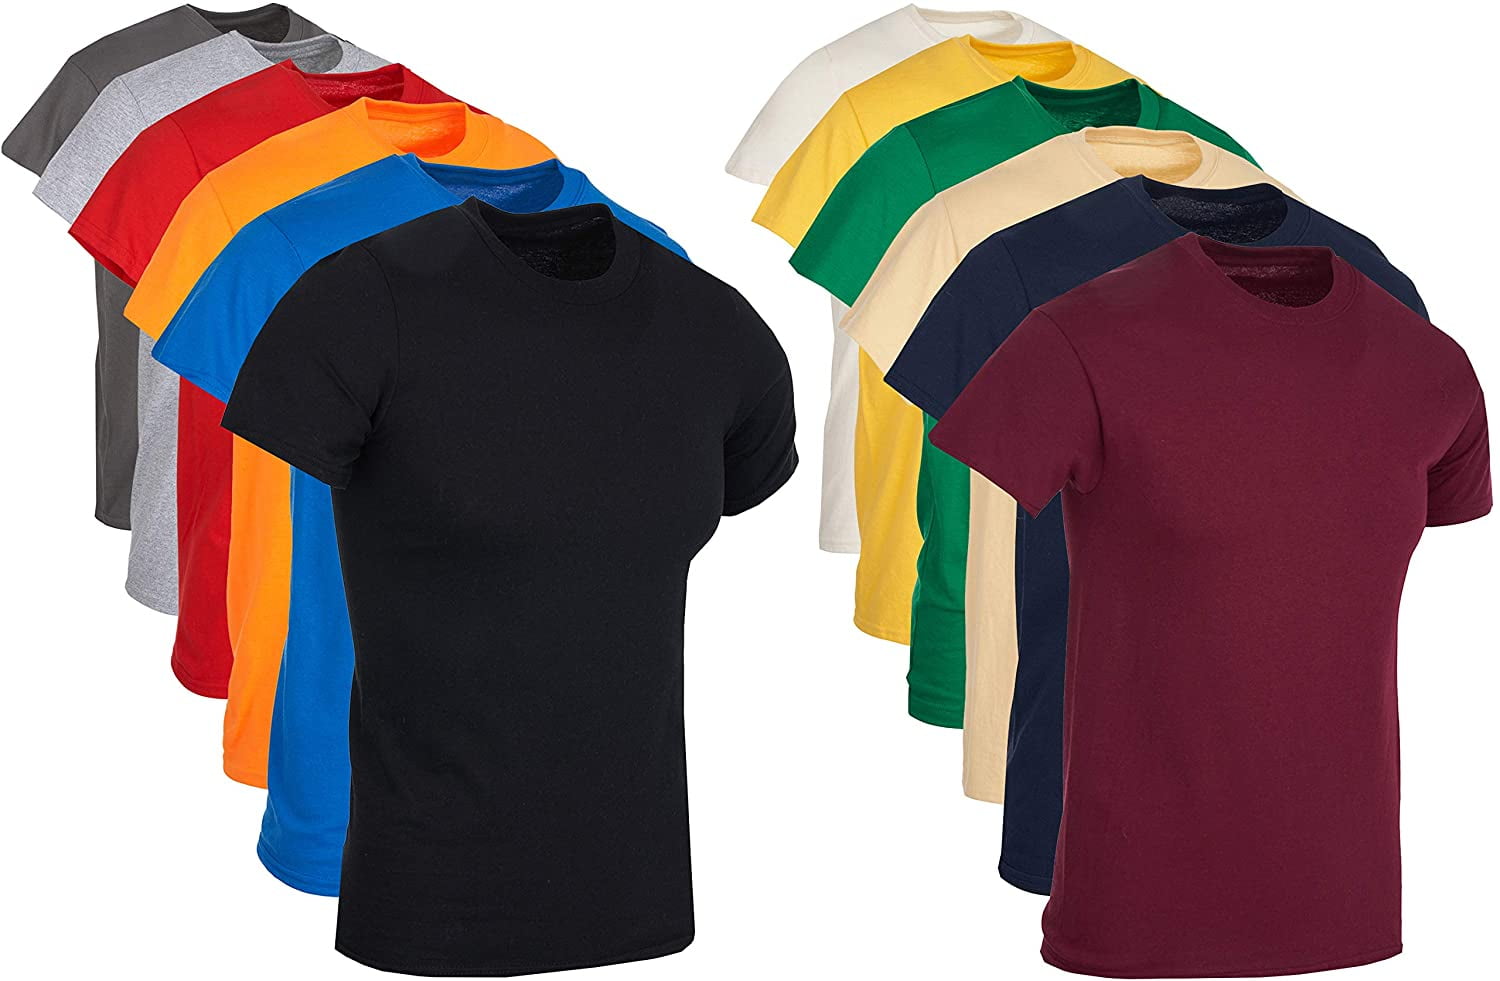 Men's O Neck Tee Shirt Slim Short Sleeve Printing Casual T-Shirt randomly send